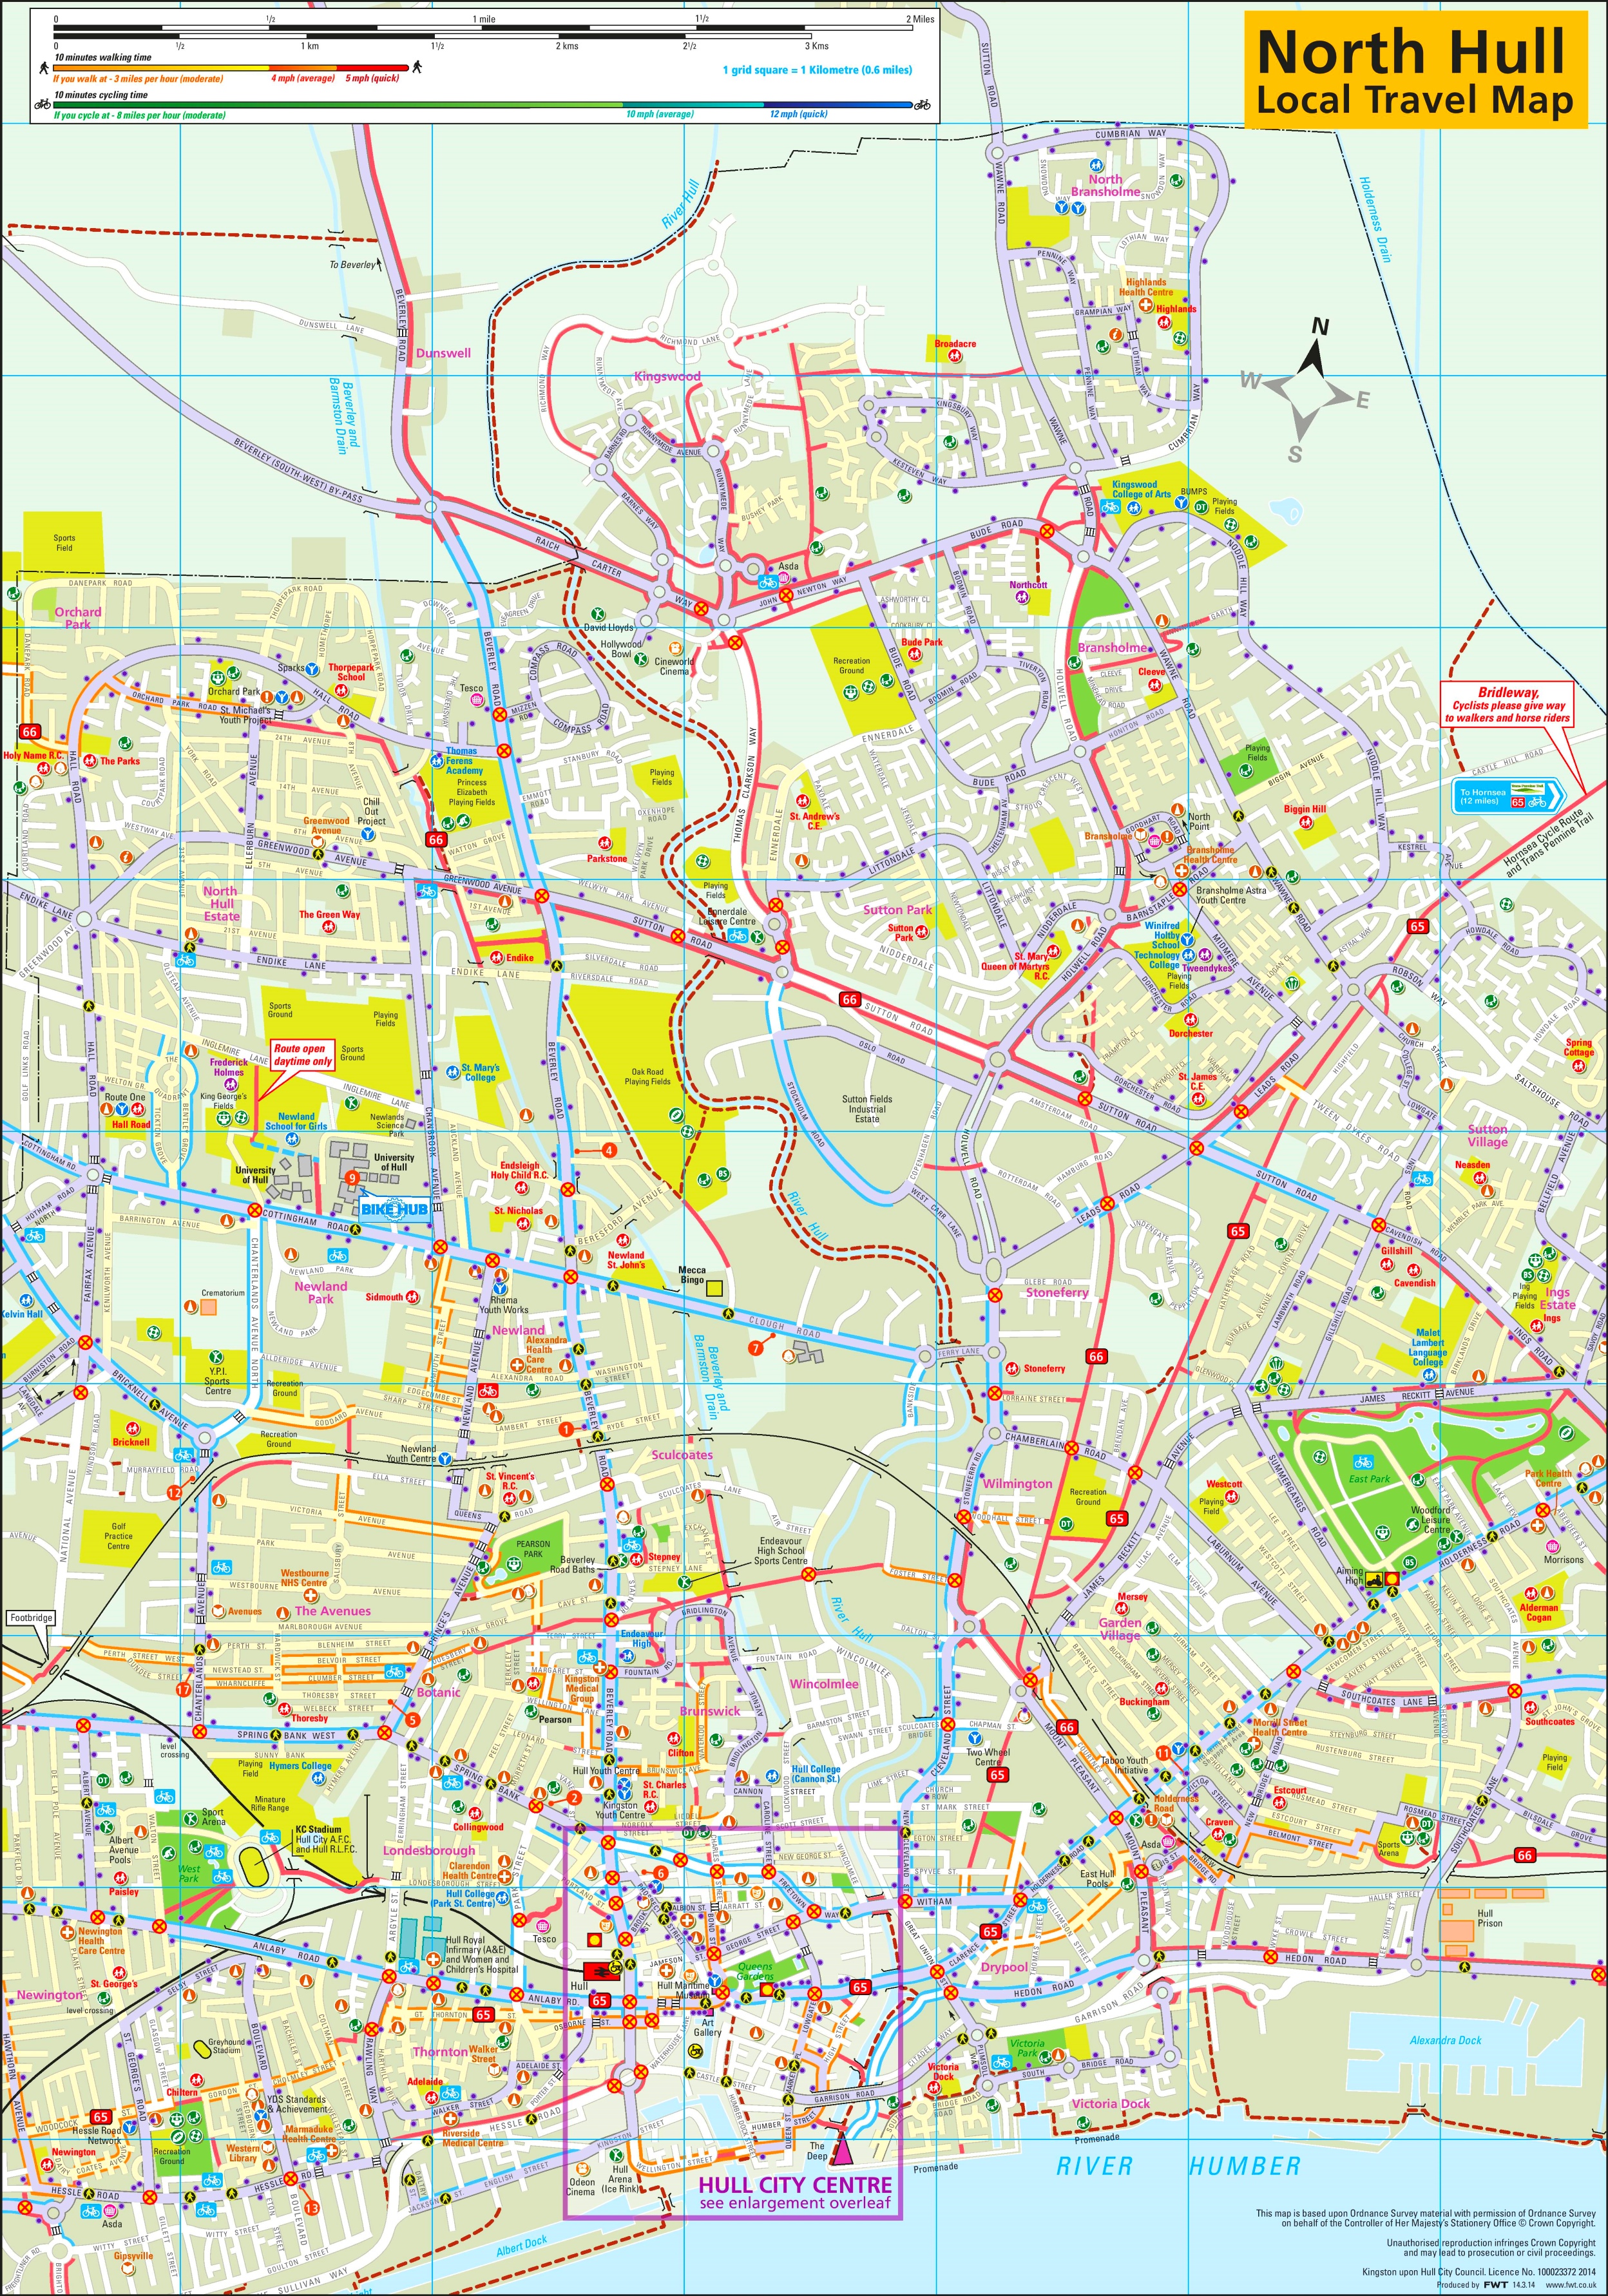 North Hull travel map2496 x 3564